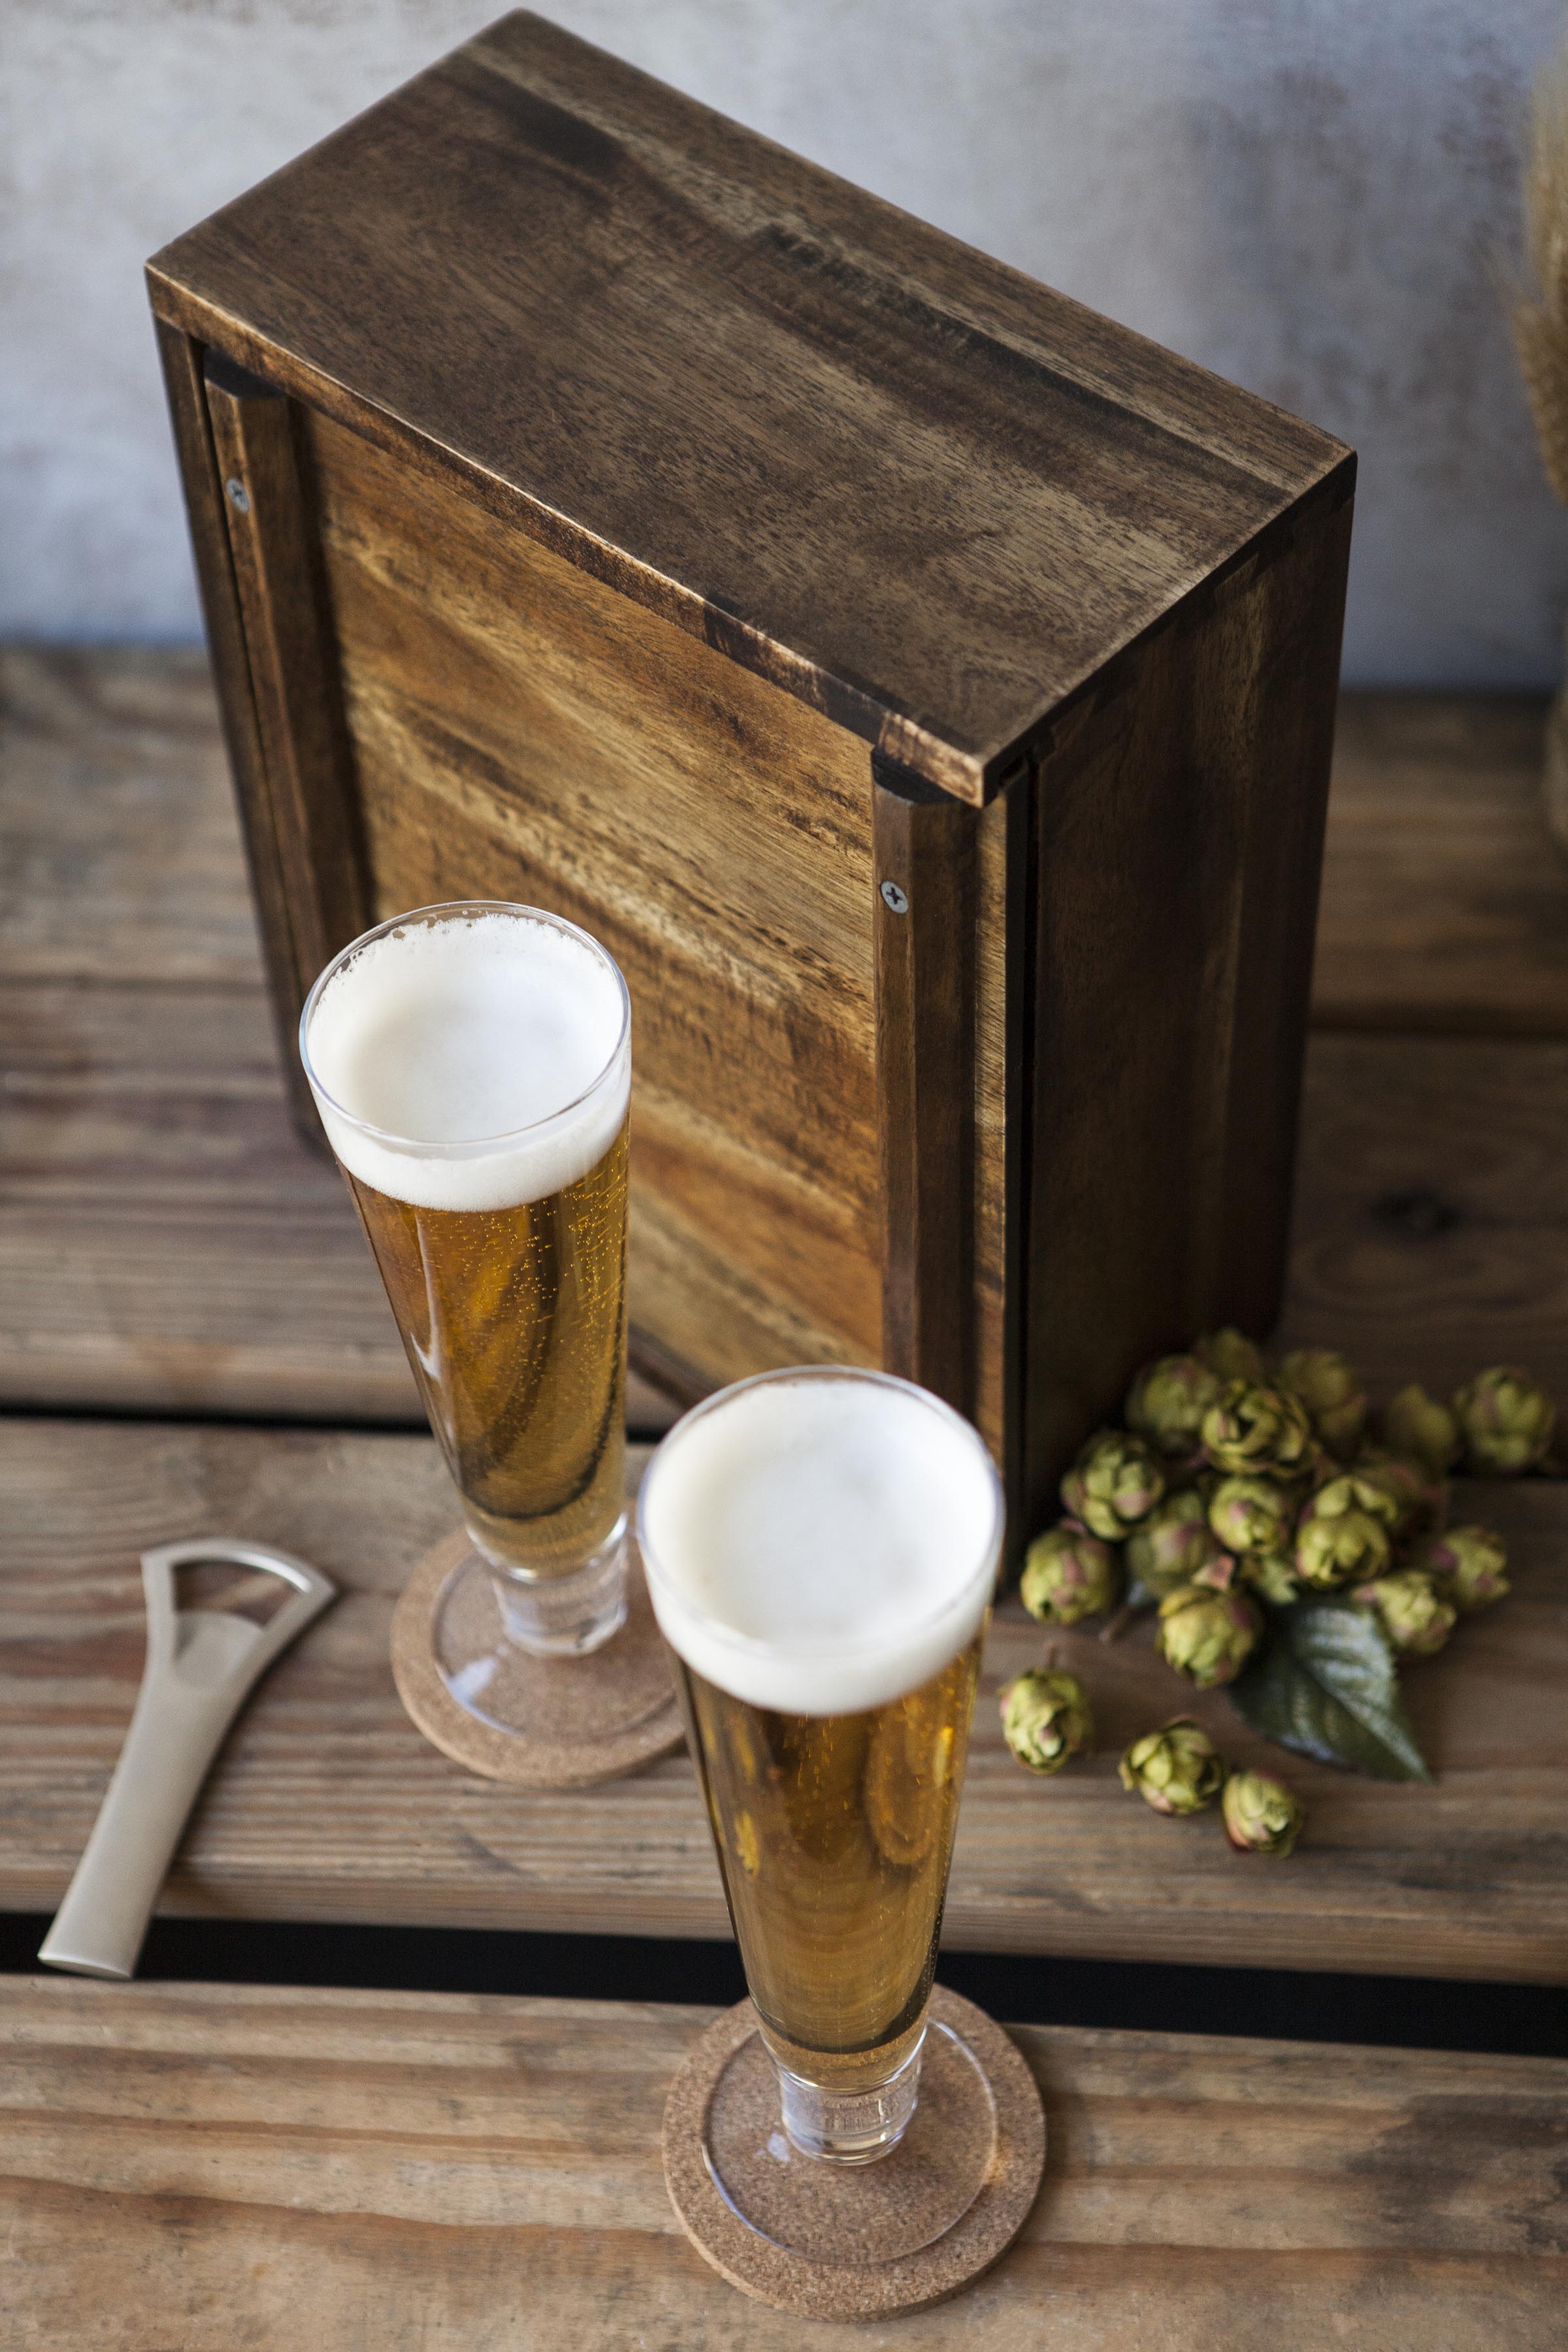 Atlanta Braves - Pilsner Beer Glass Gift Set